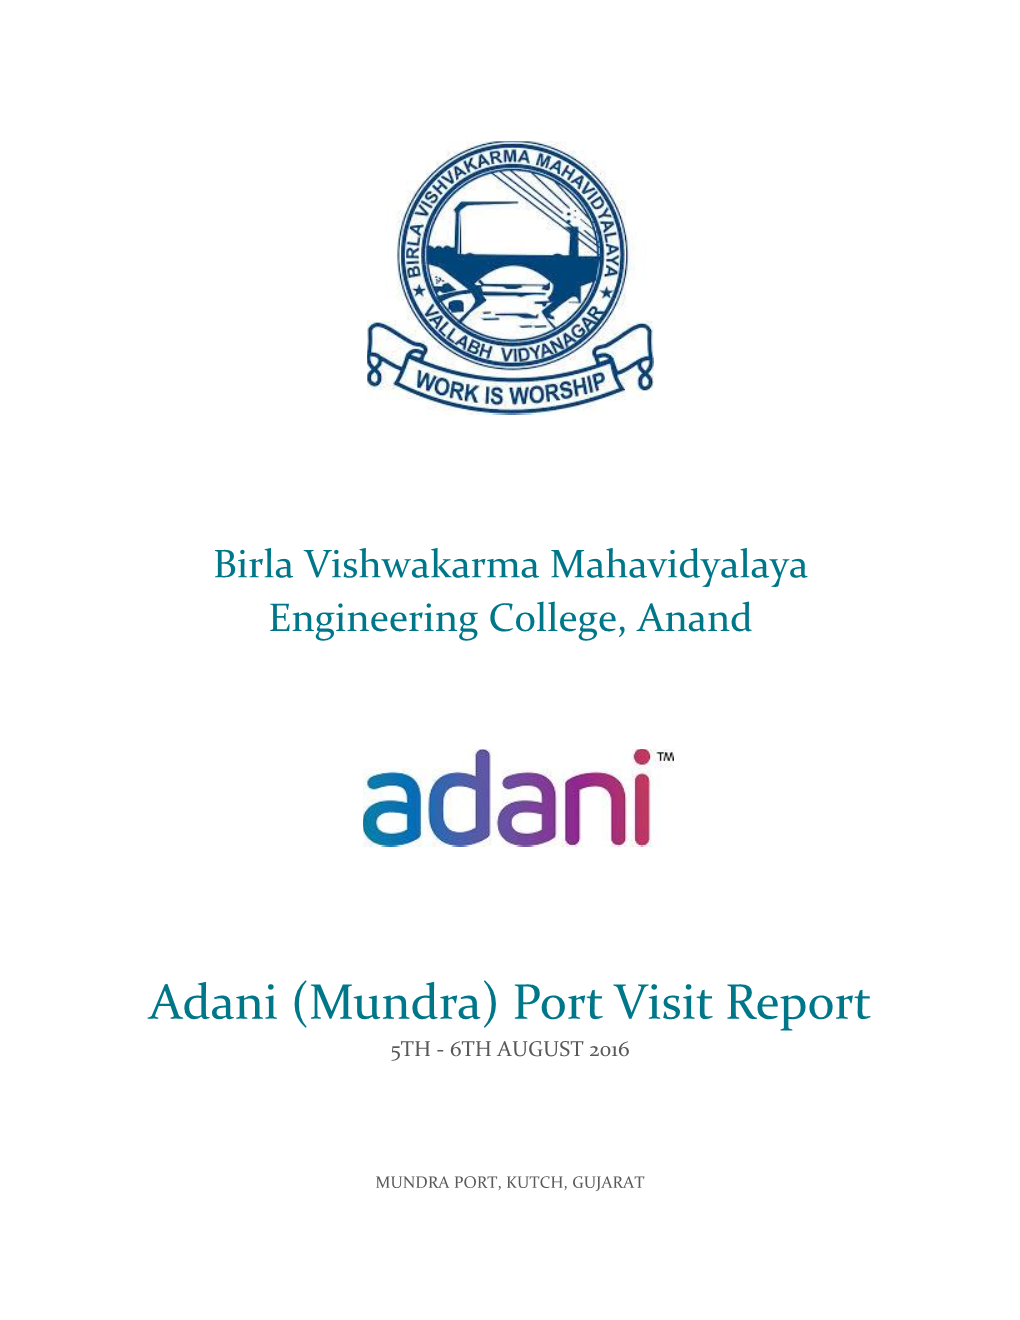 Adani (Mundra) Port Visit Report 5TH - 6TH AUGUST 2016